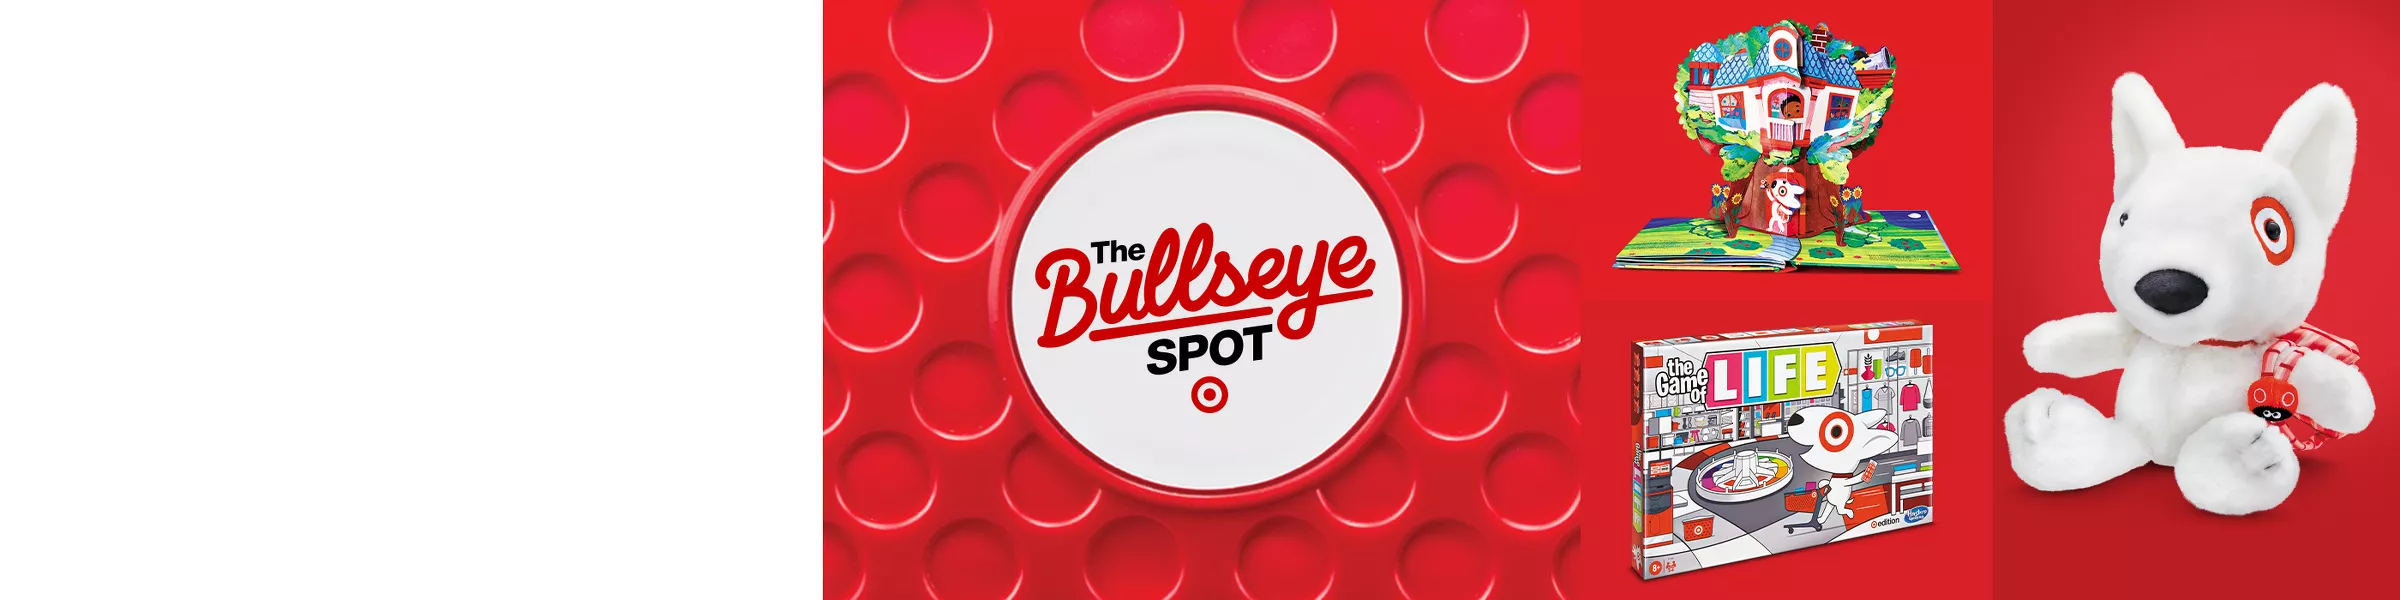 The Bullseye Spot